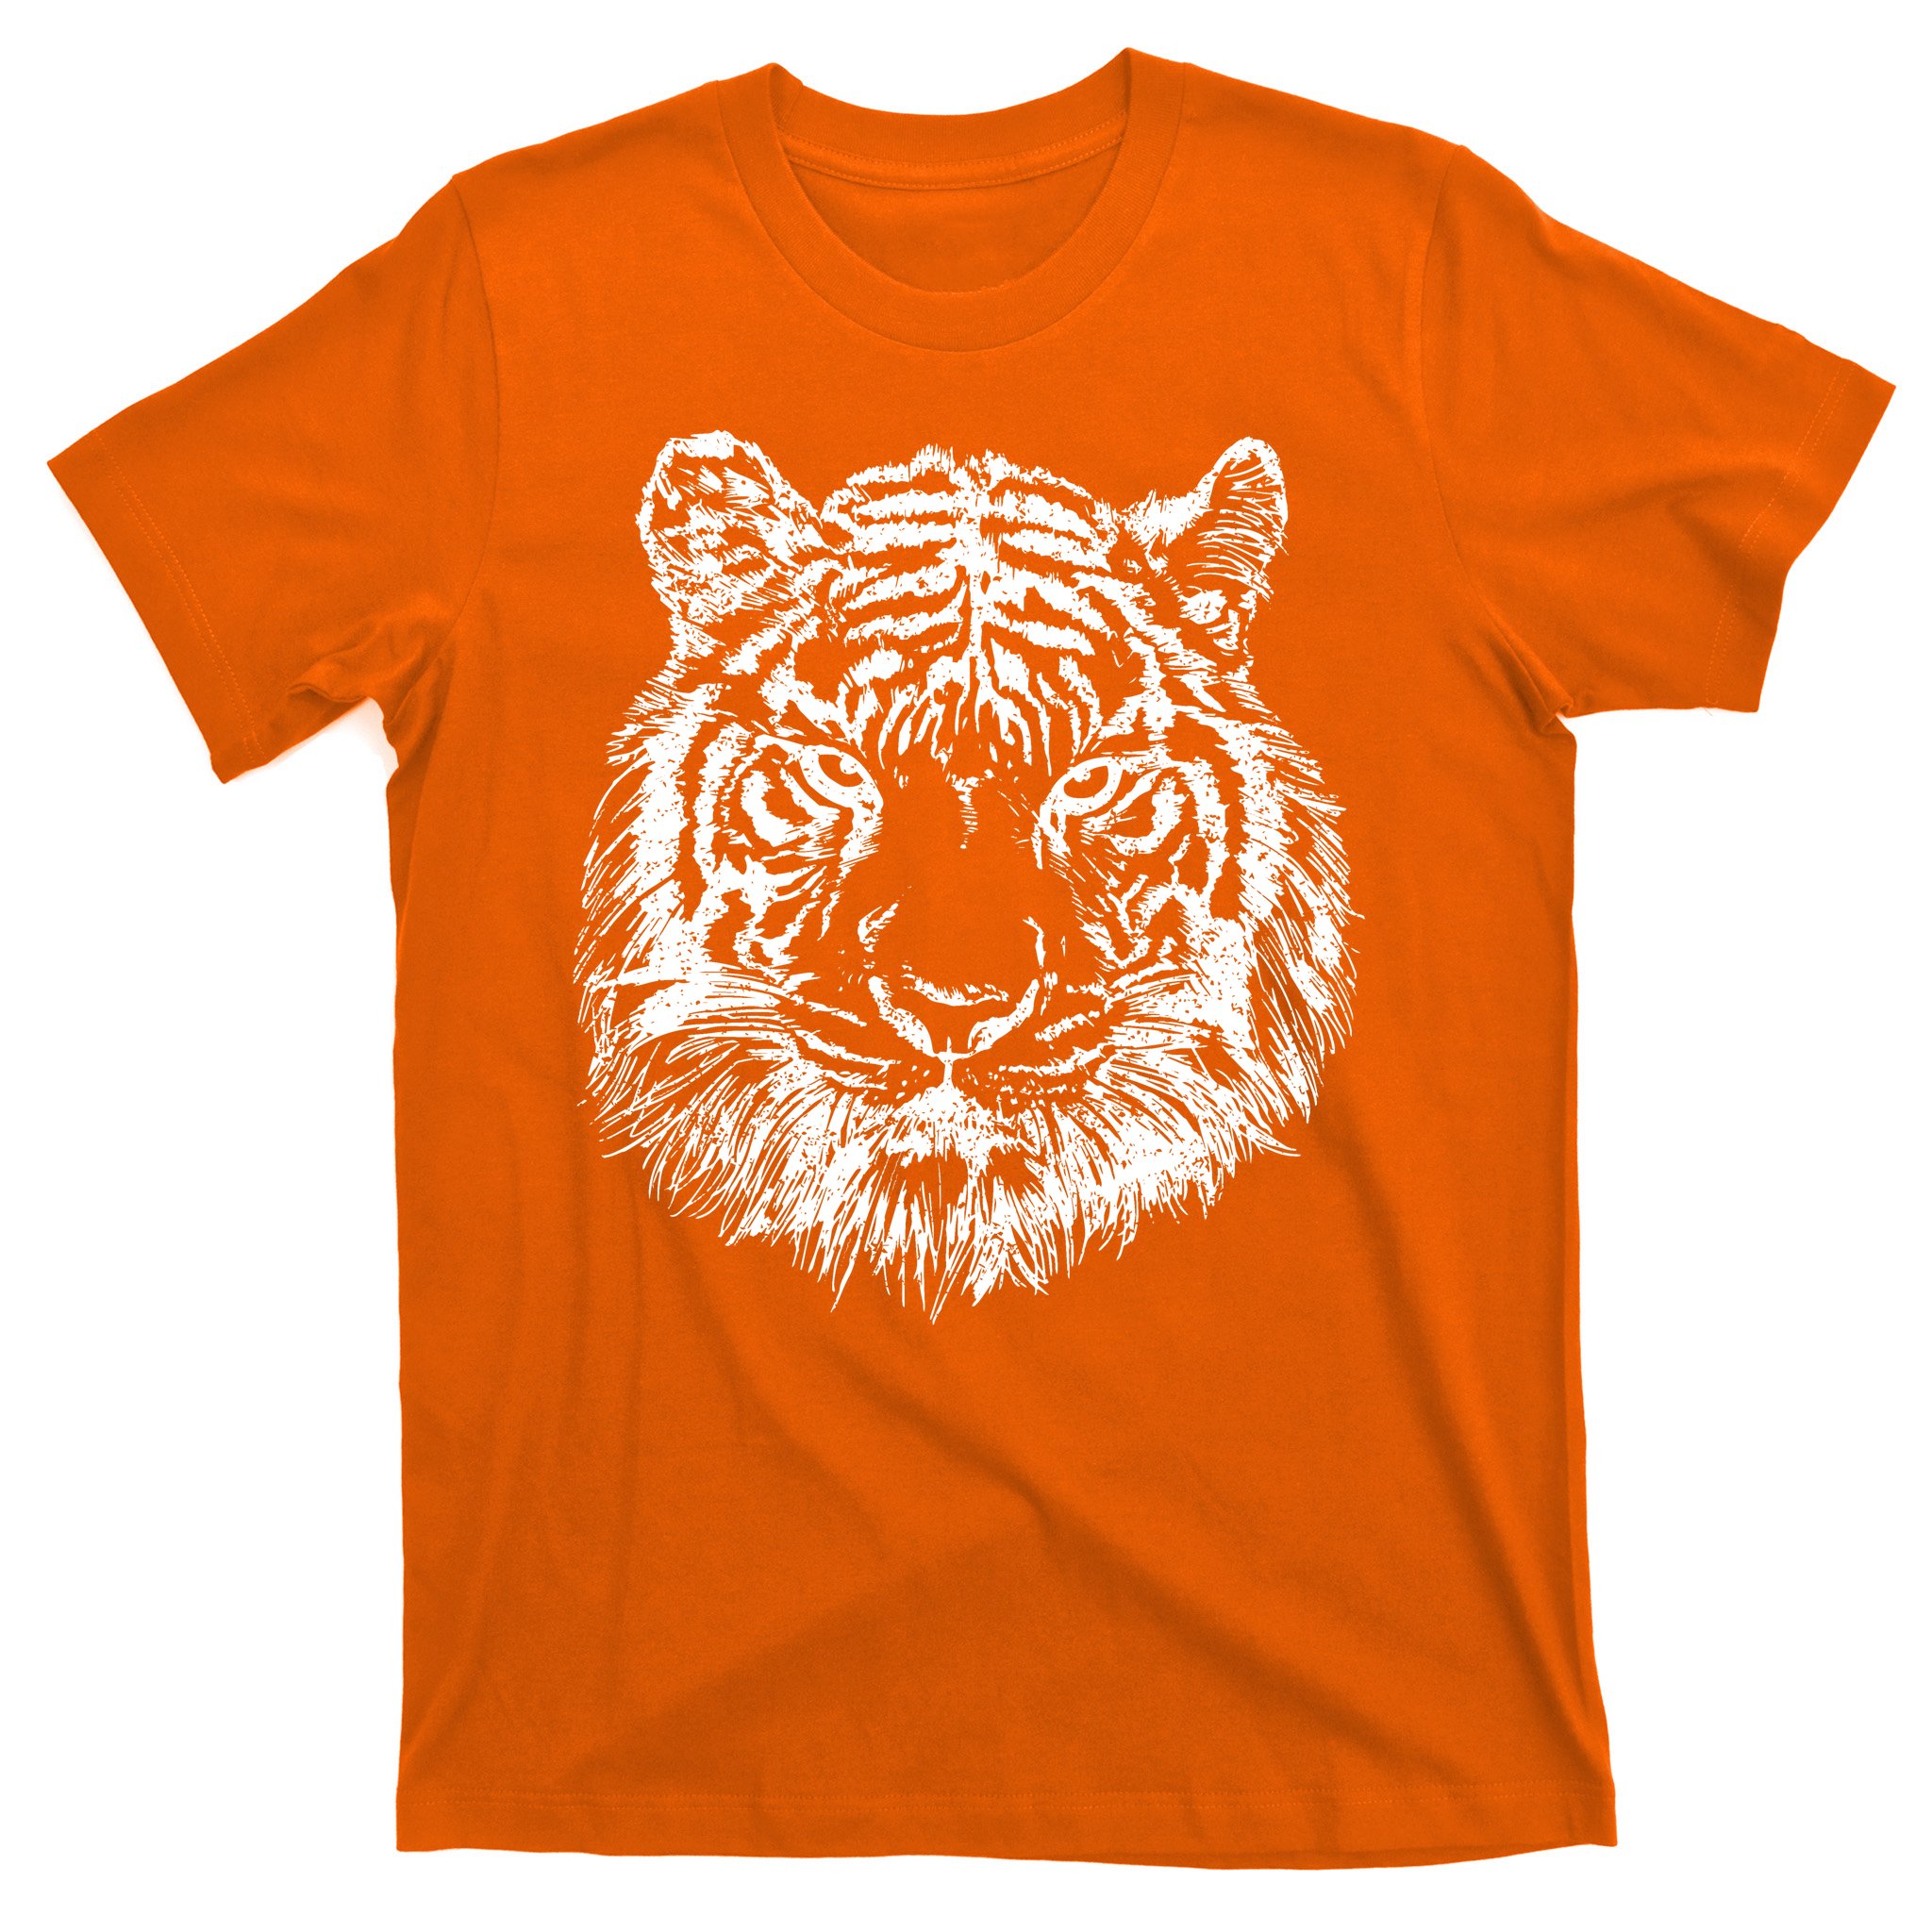 Teeshirtpalace Tiger Cool Design T-Shirt